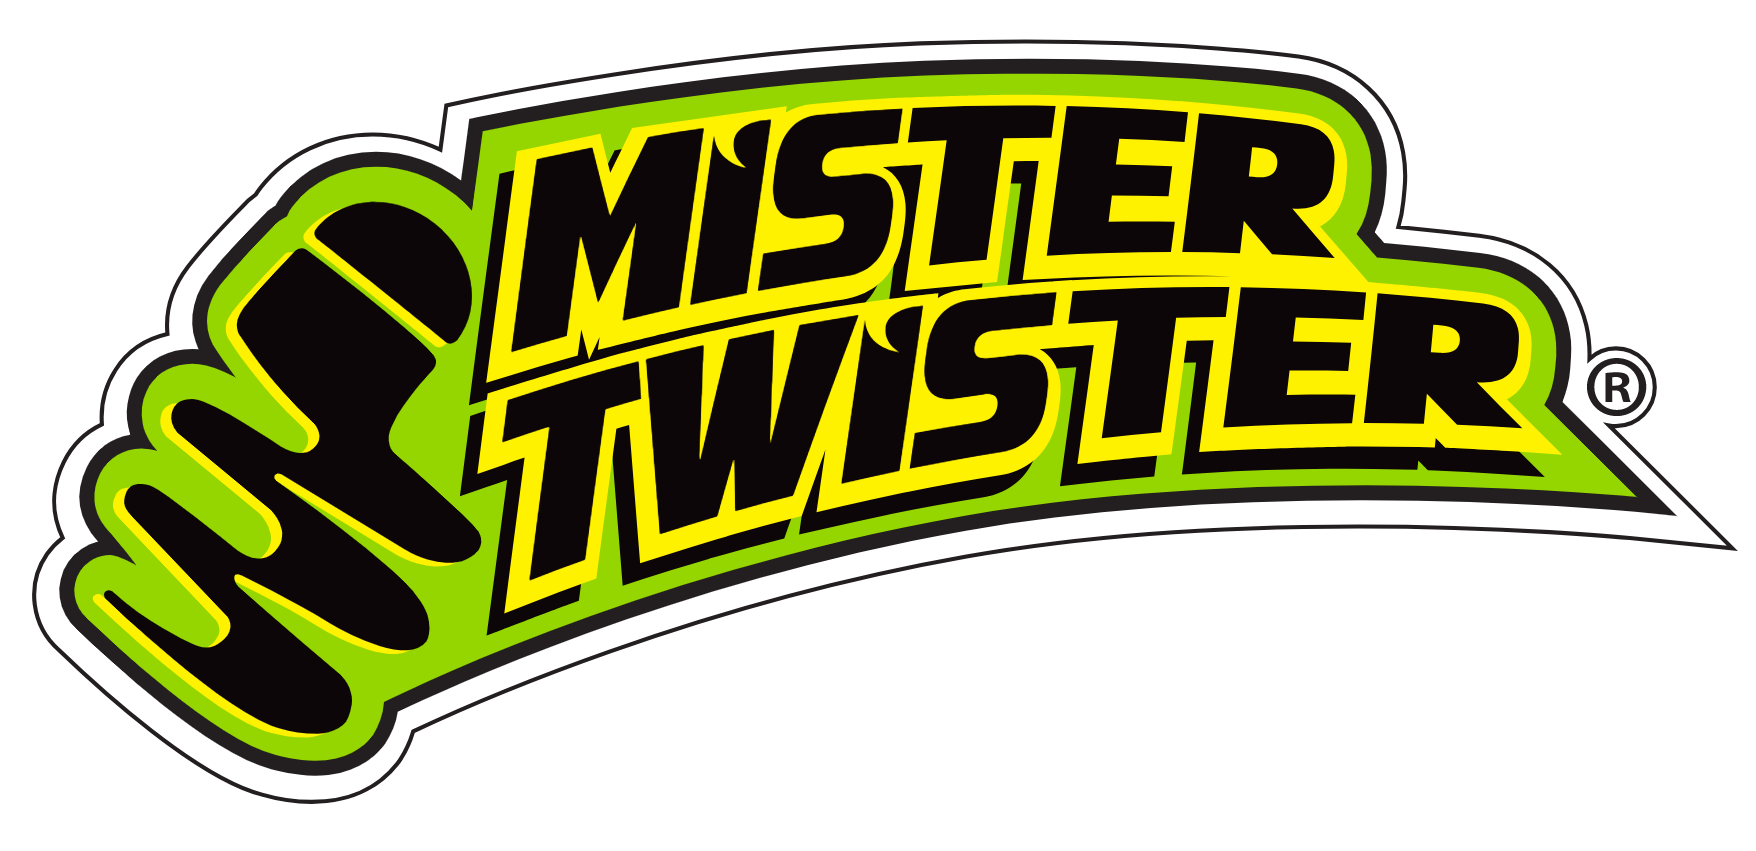 Mister Twister Baits